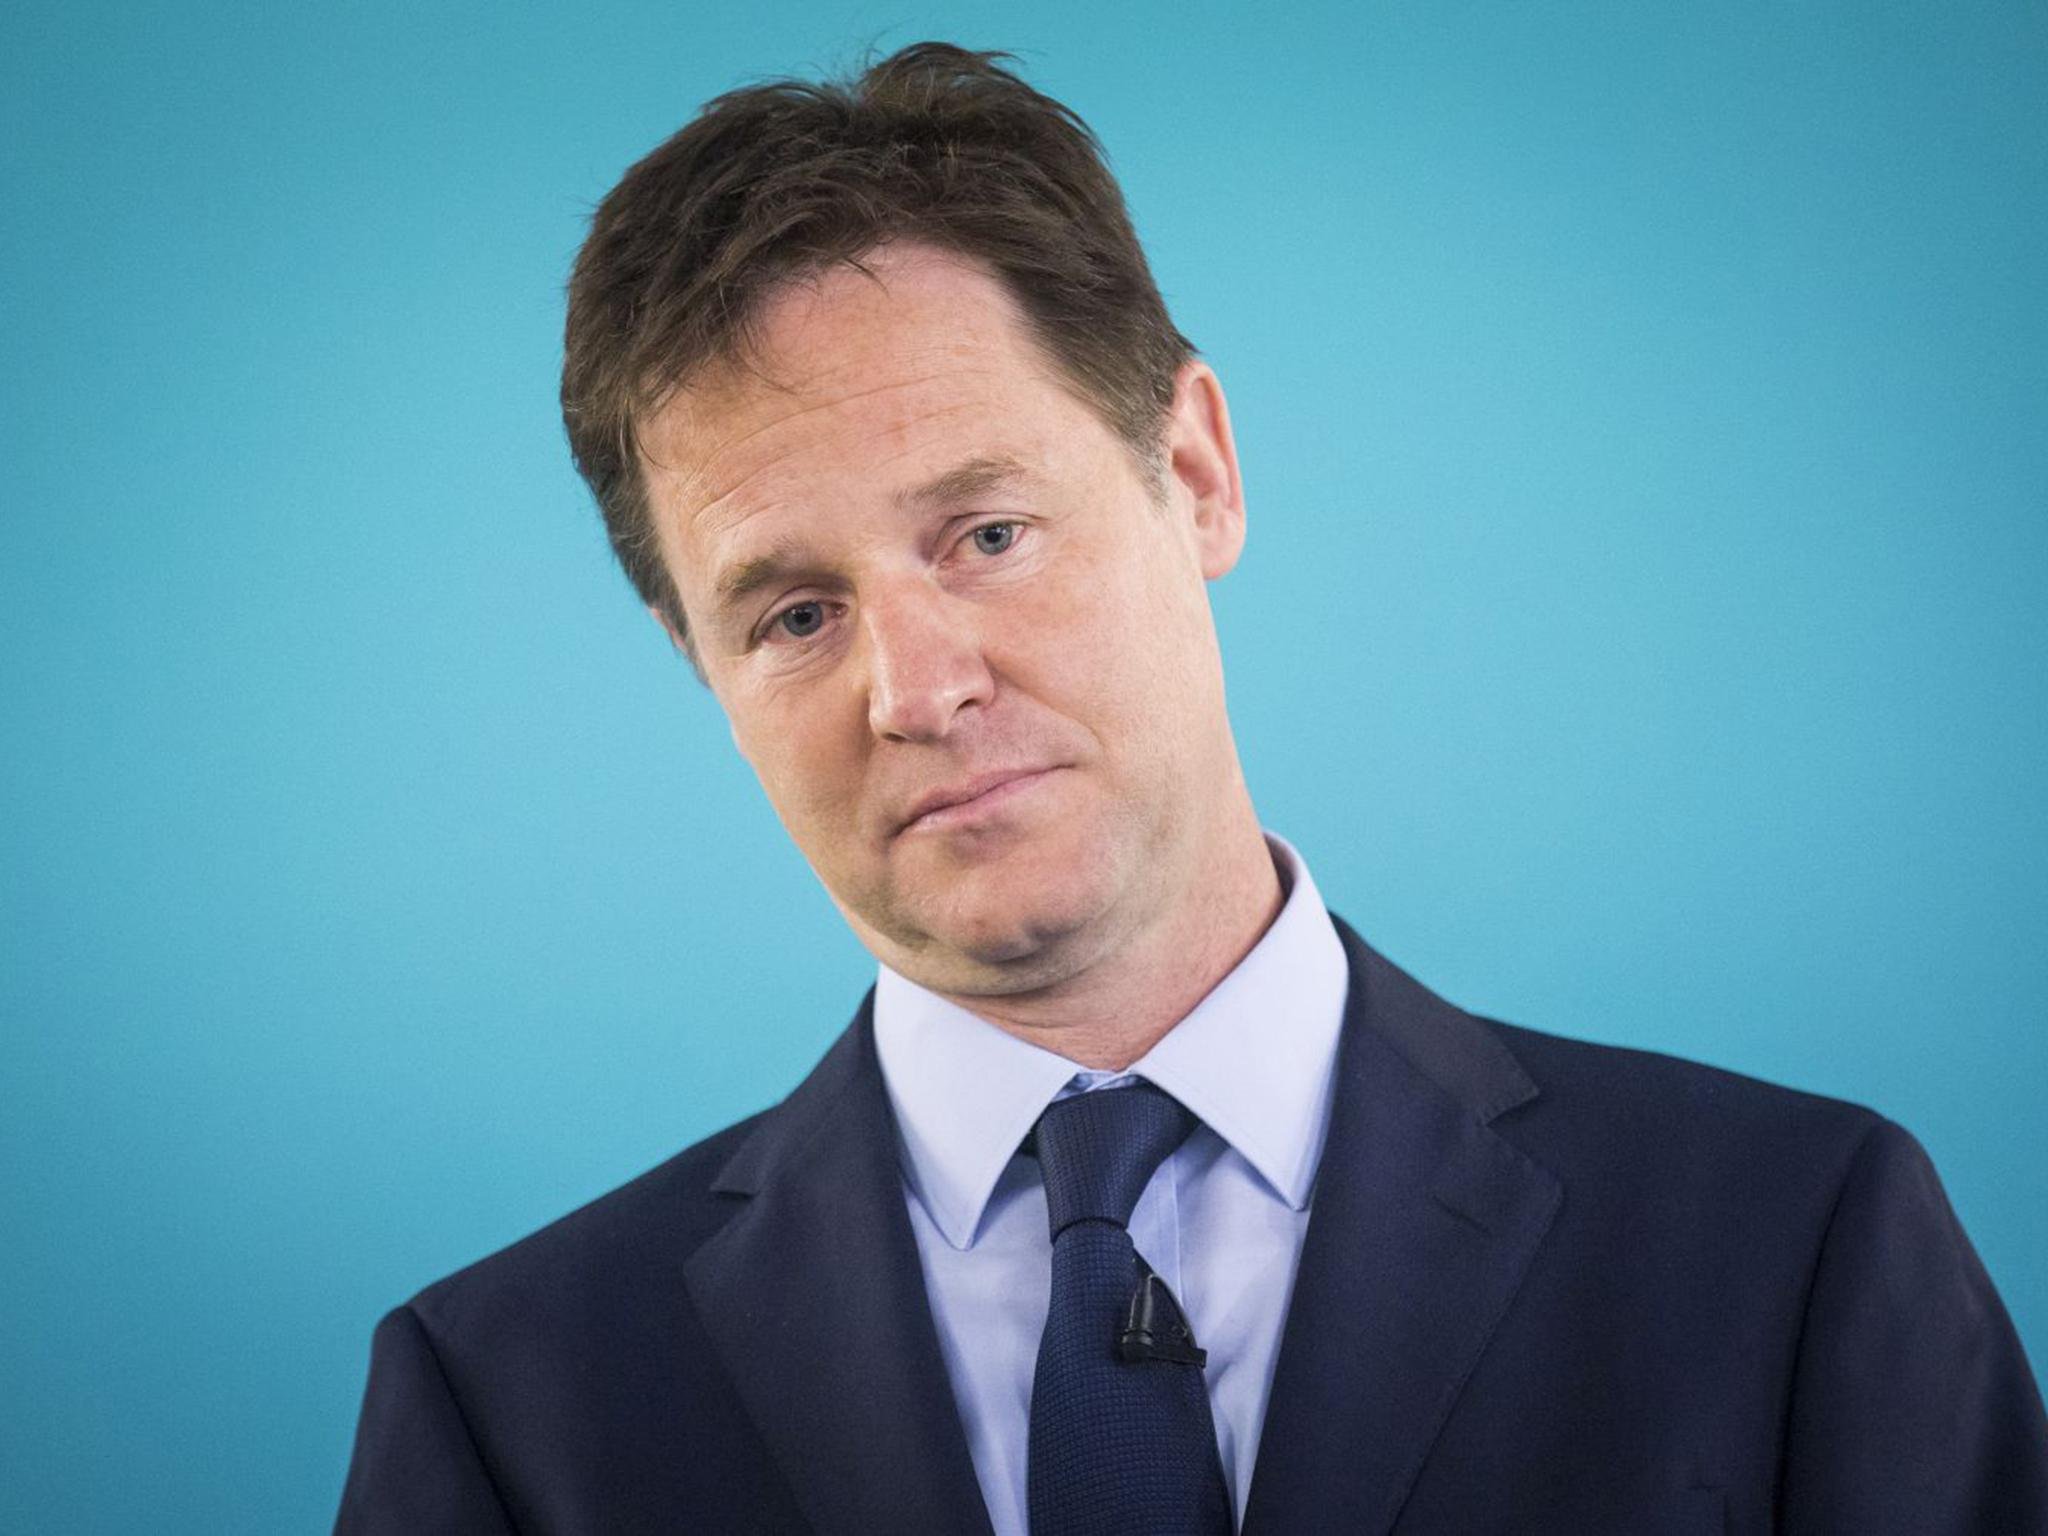  Fostul vicepremier britanic Nick Clegg, angajat de Facebook